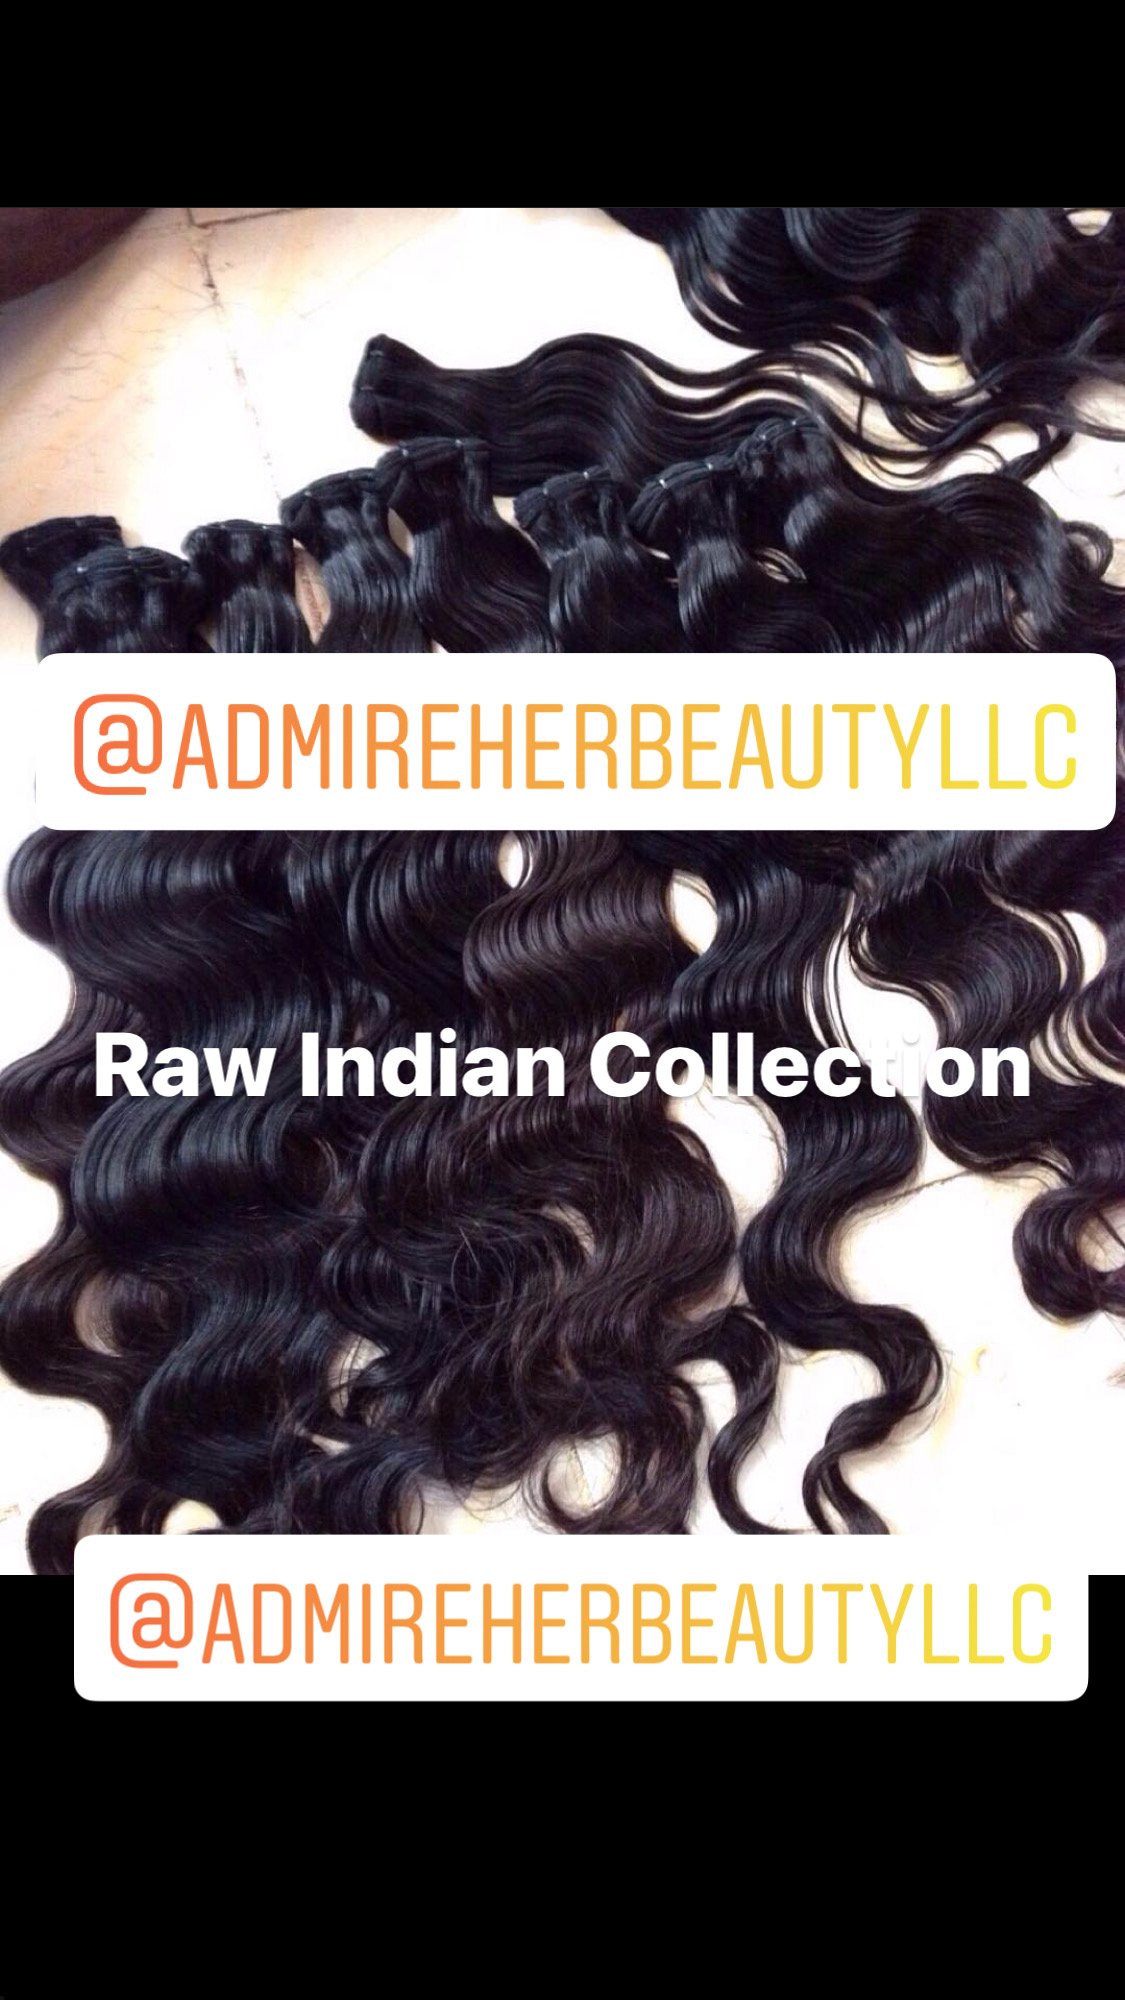 Raw Indian Temple Wavy Hair | Admireherbeautyllc